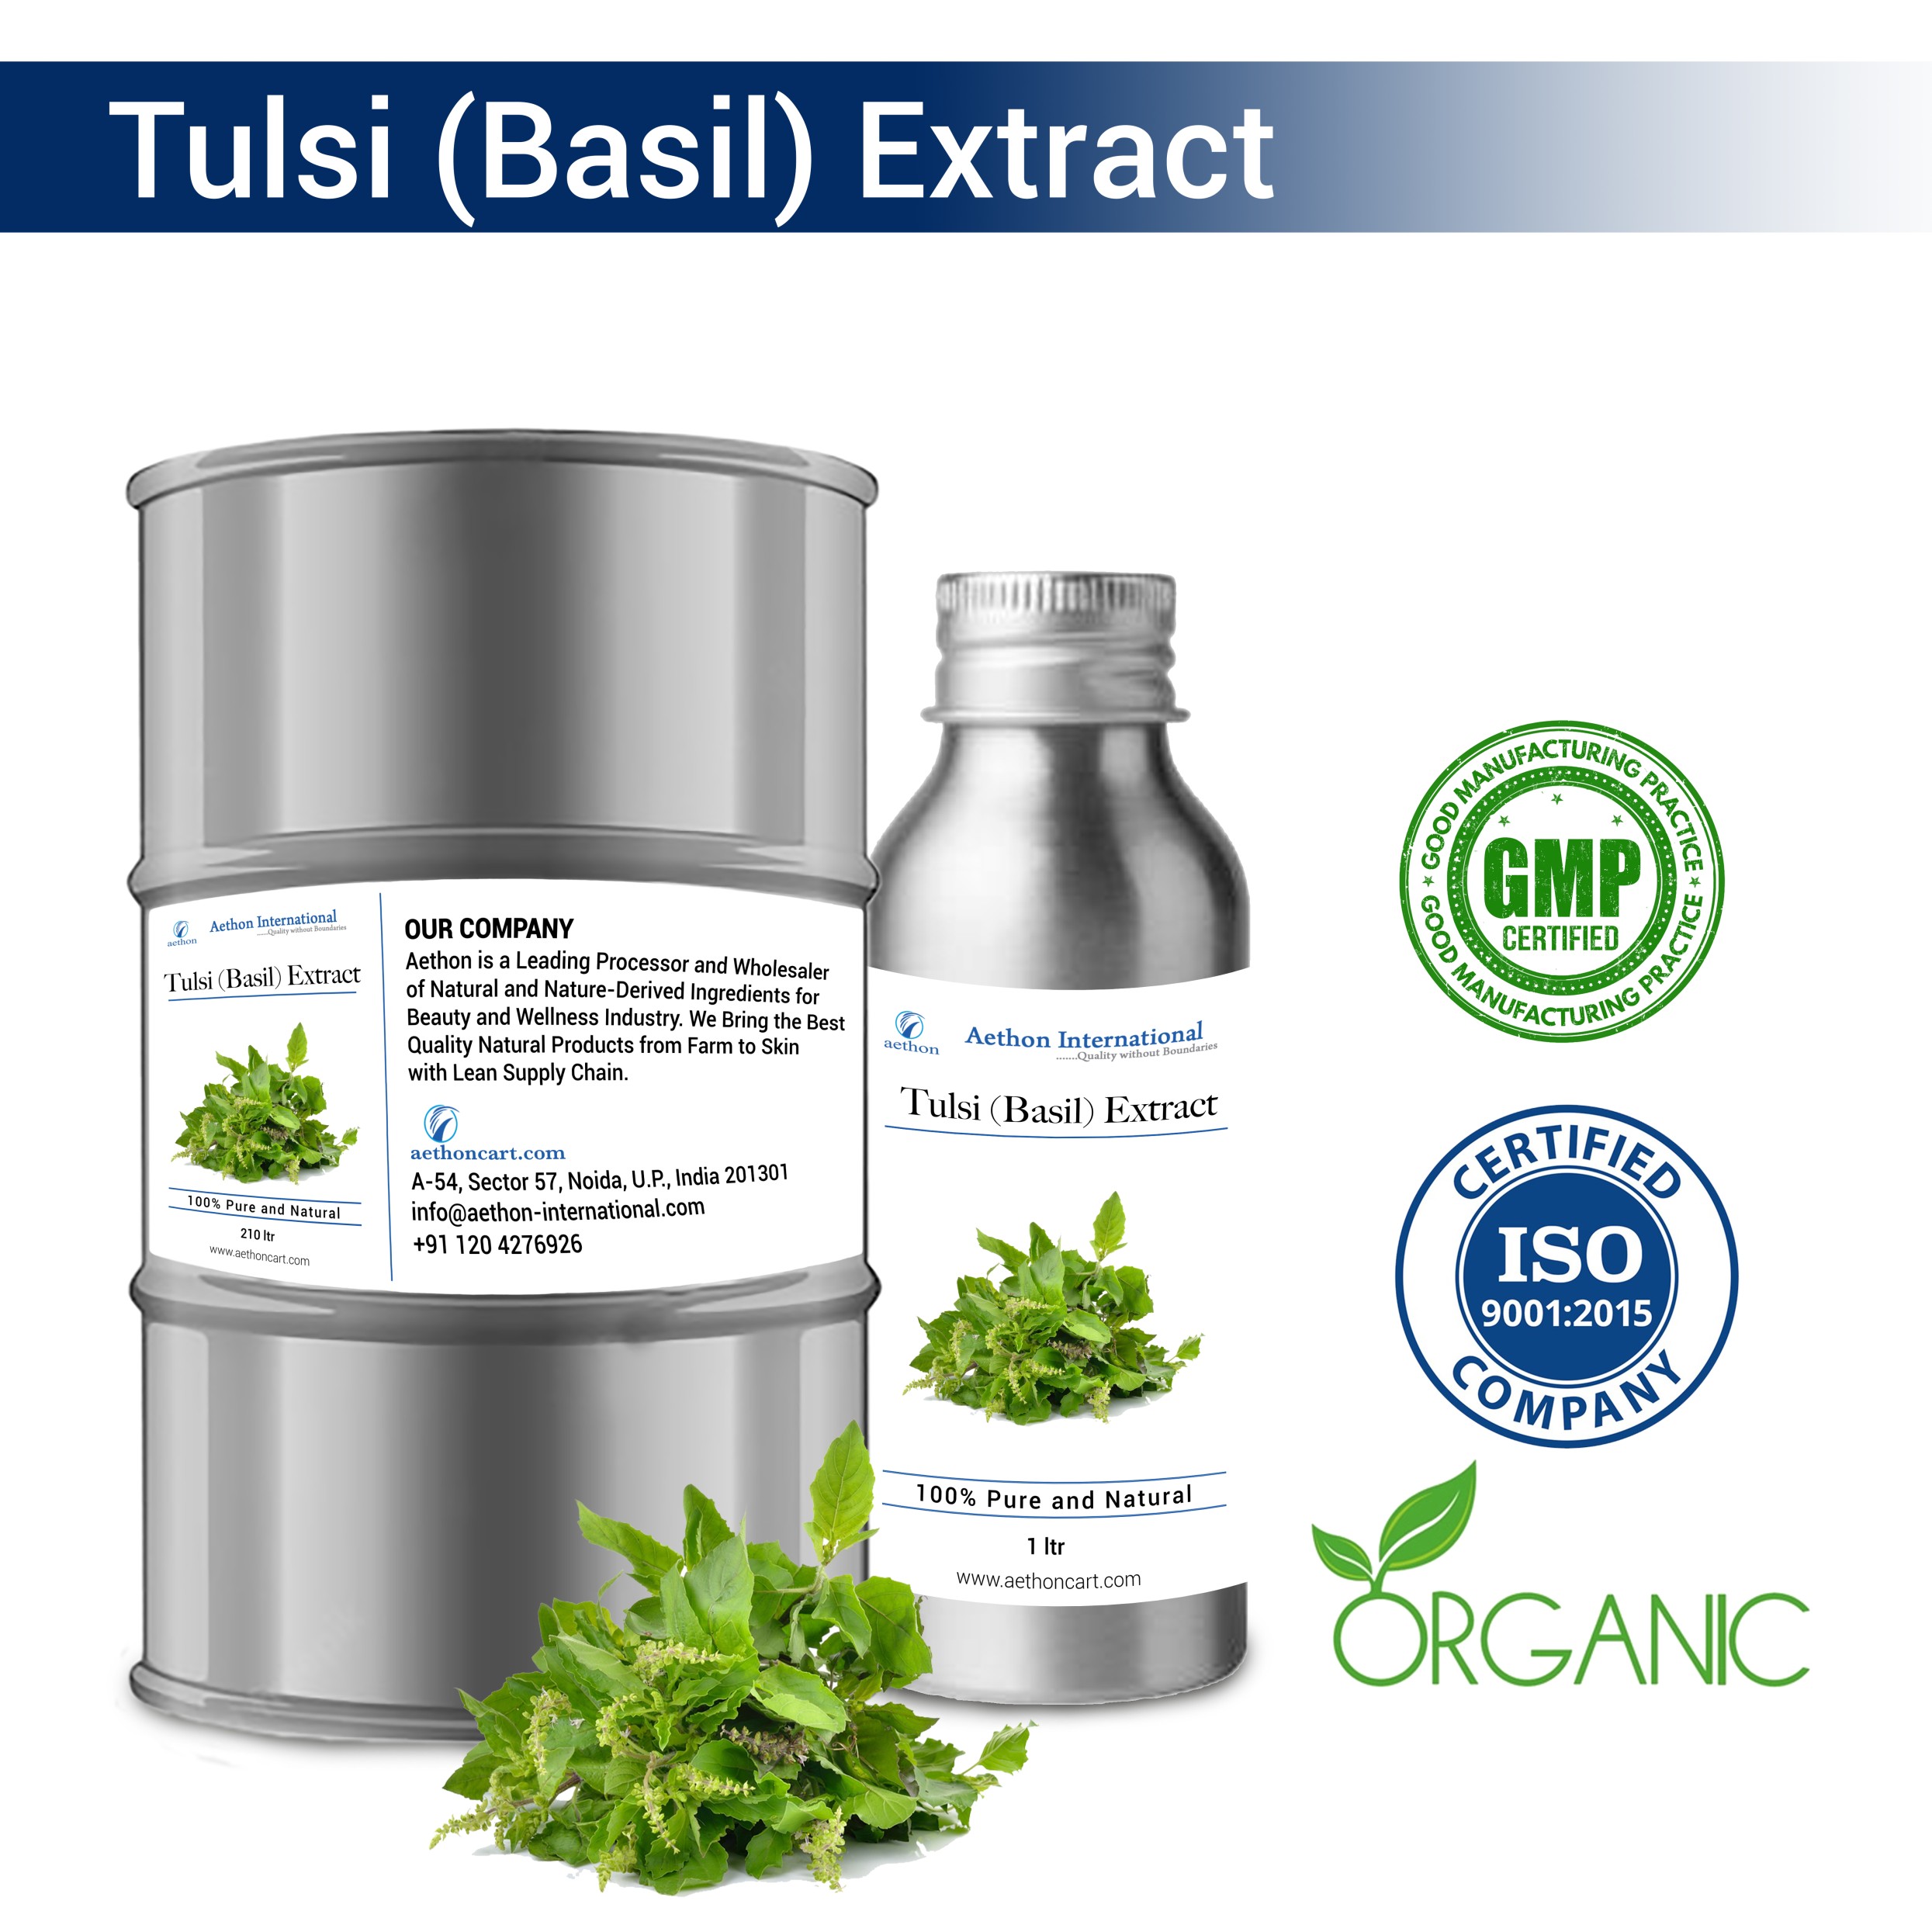 Tulsi (Basil) Extract